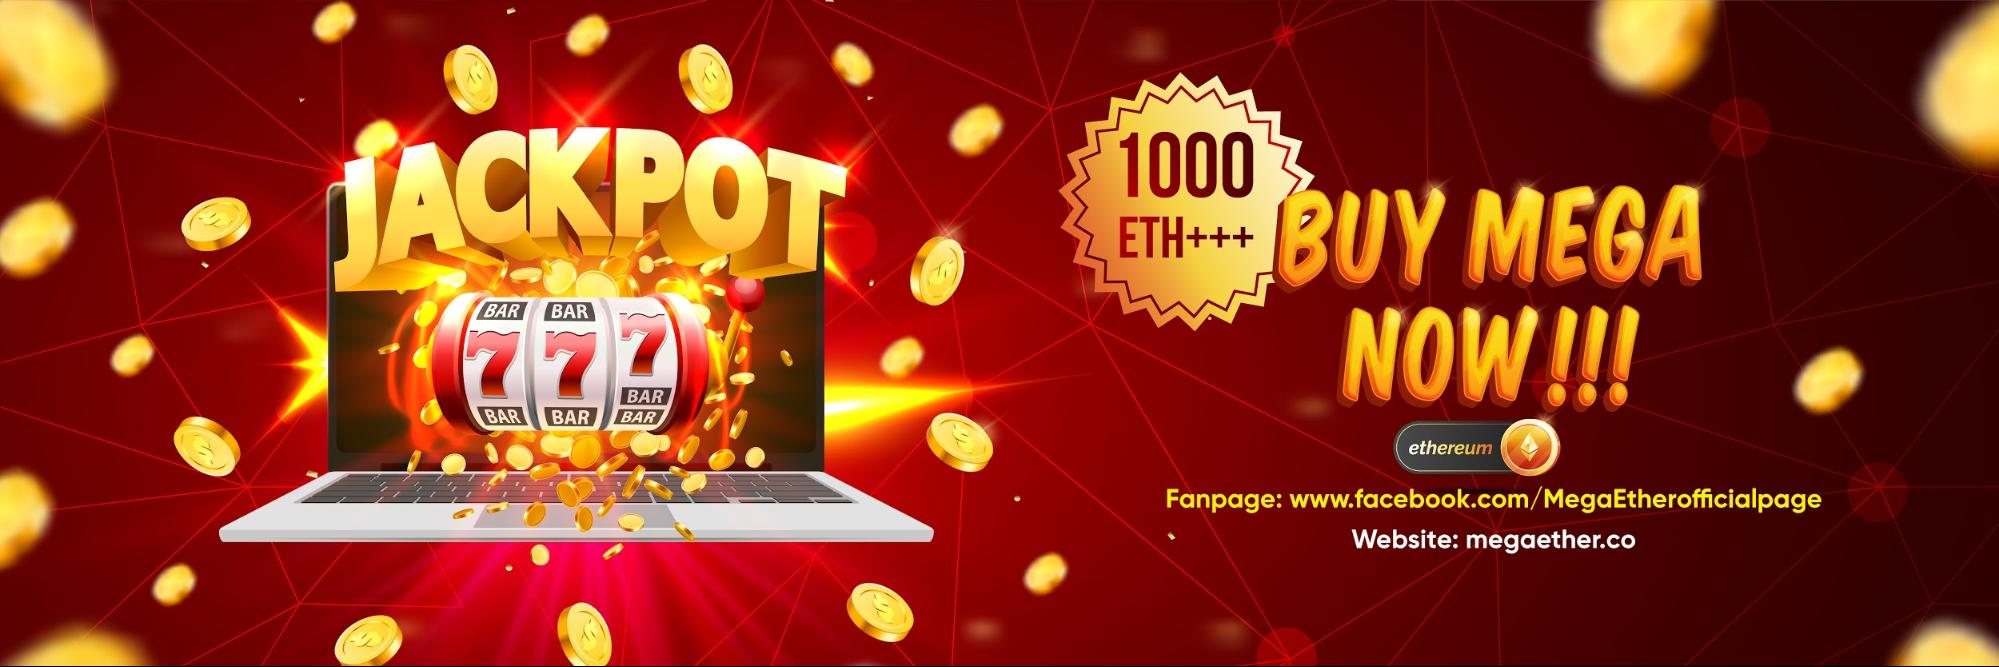  lottery eth prize megaether blockchain platform 1000 